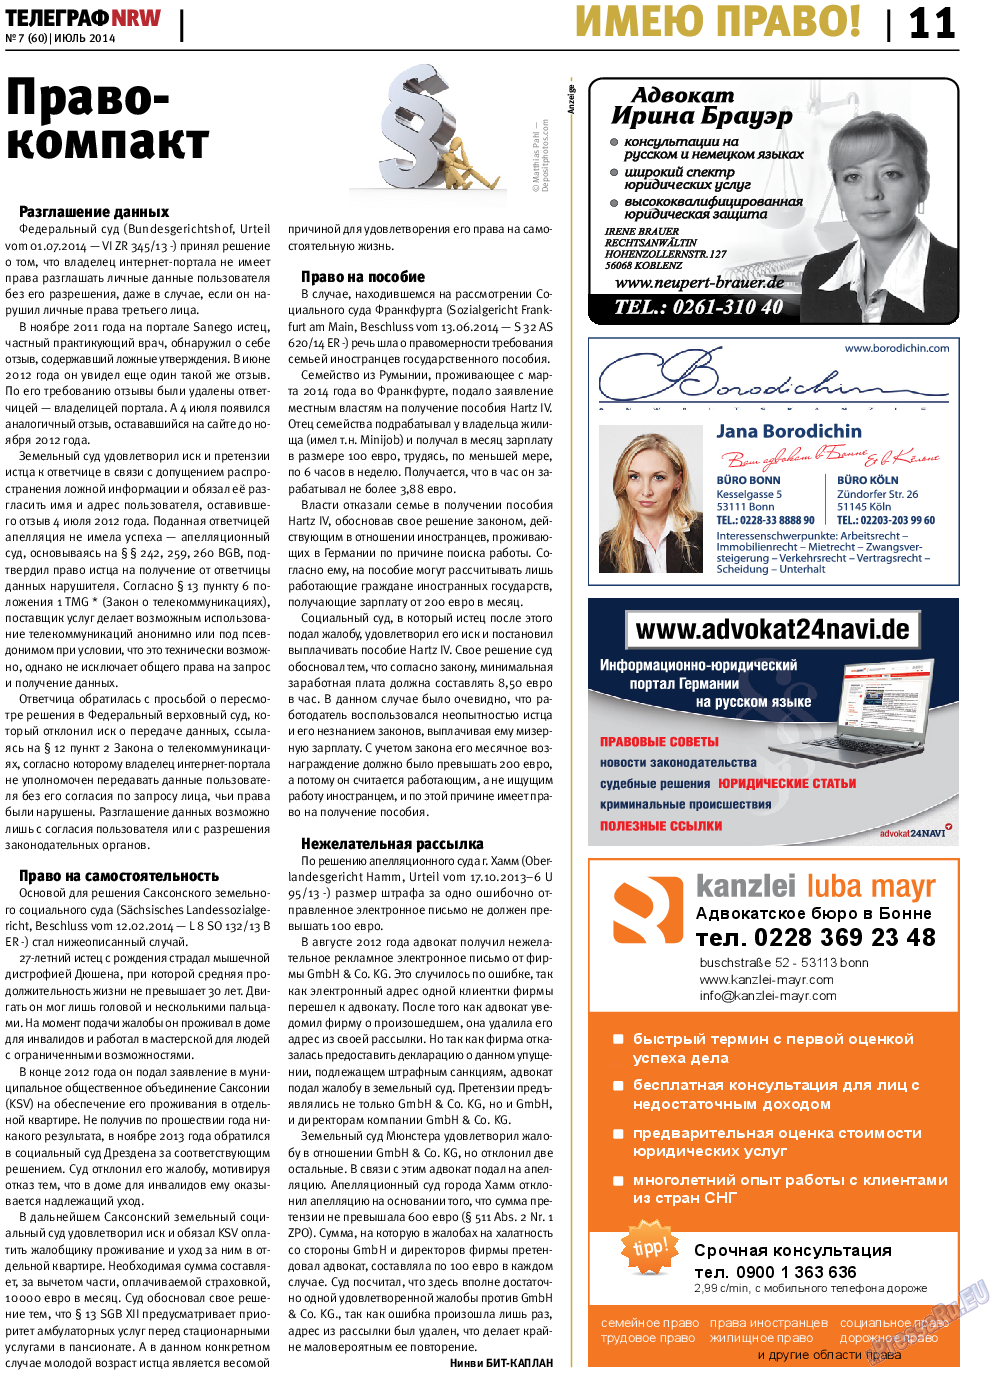 Телеграф NRW, газета. 2014 №7 стр.11